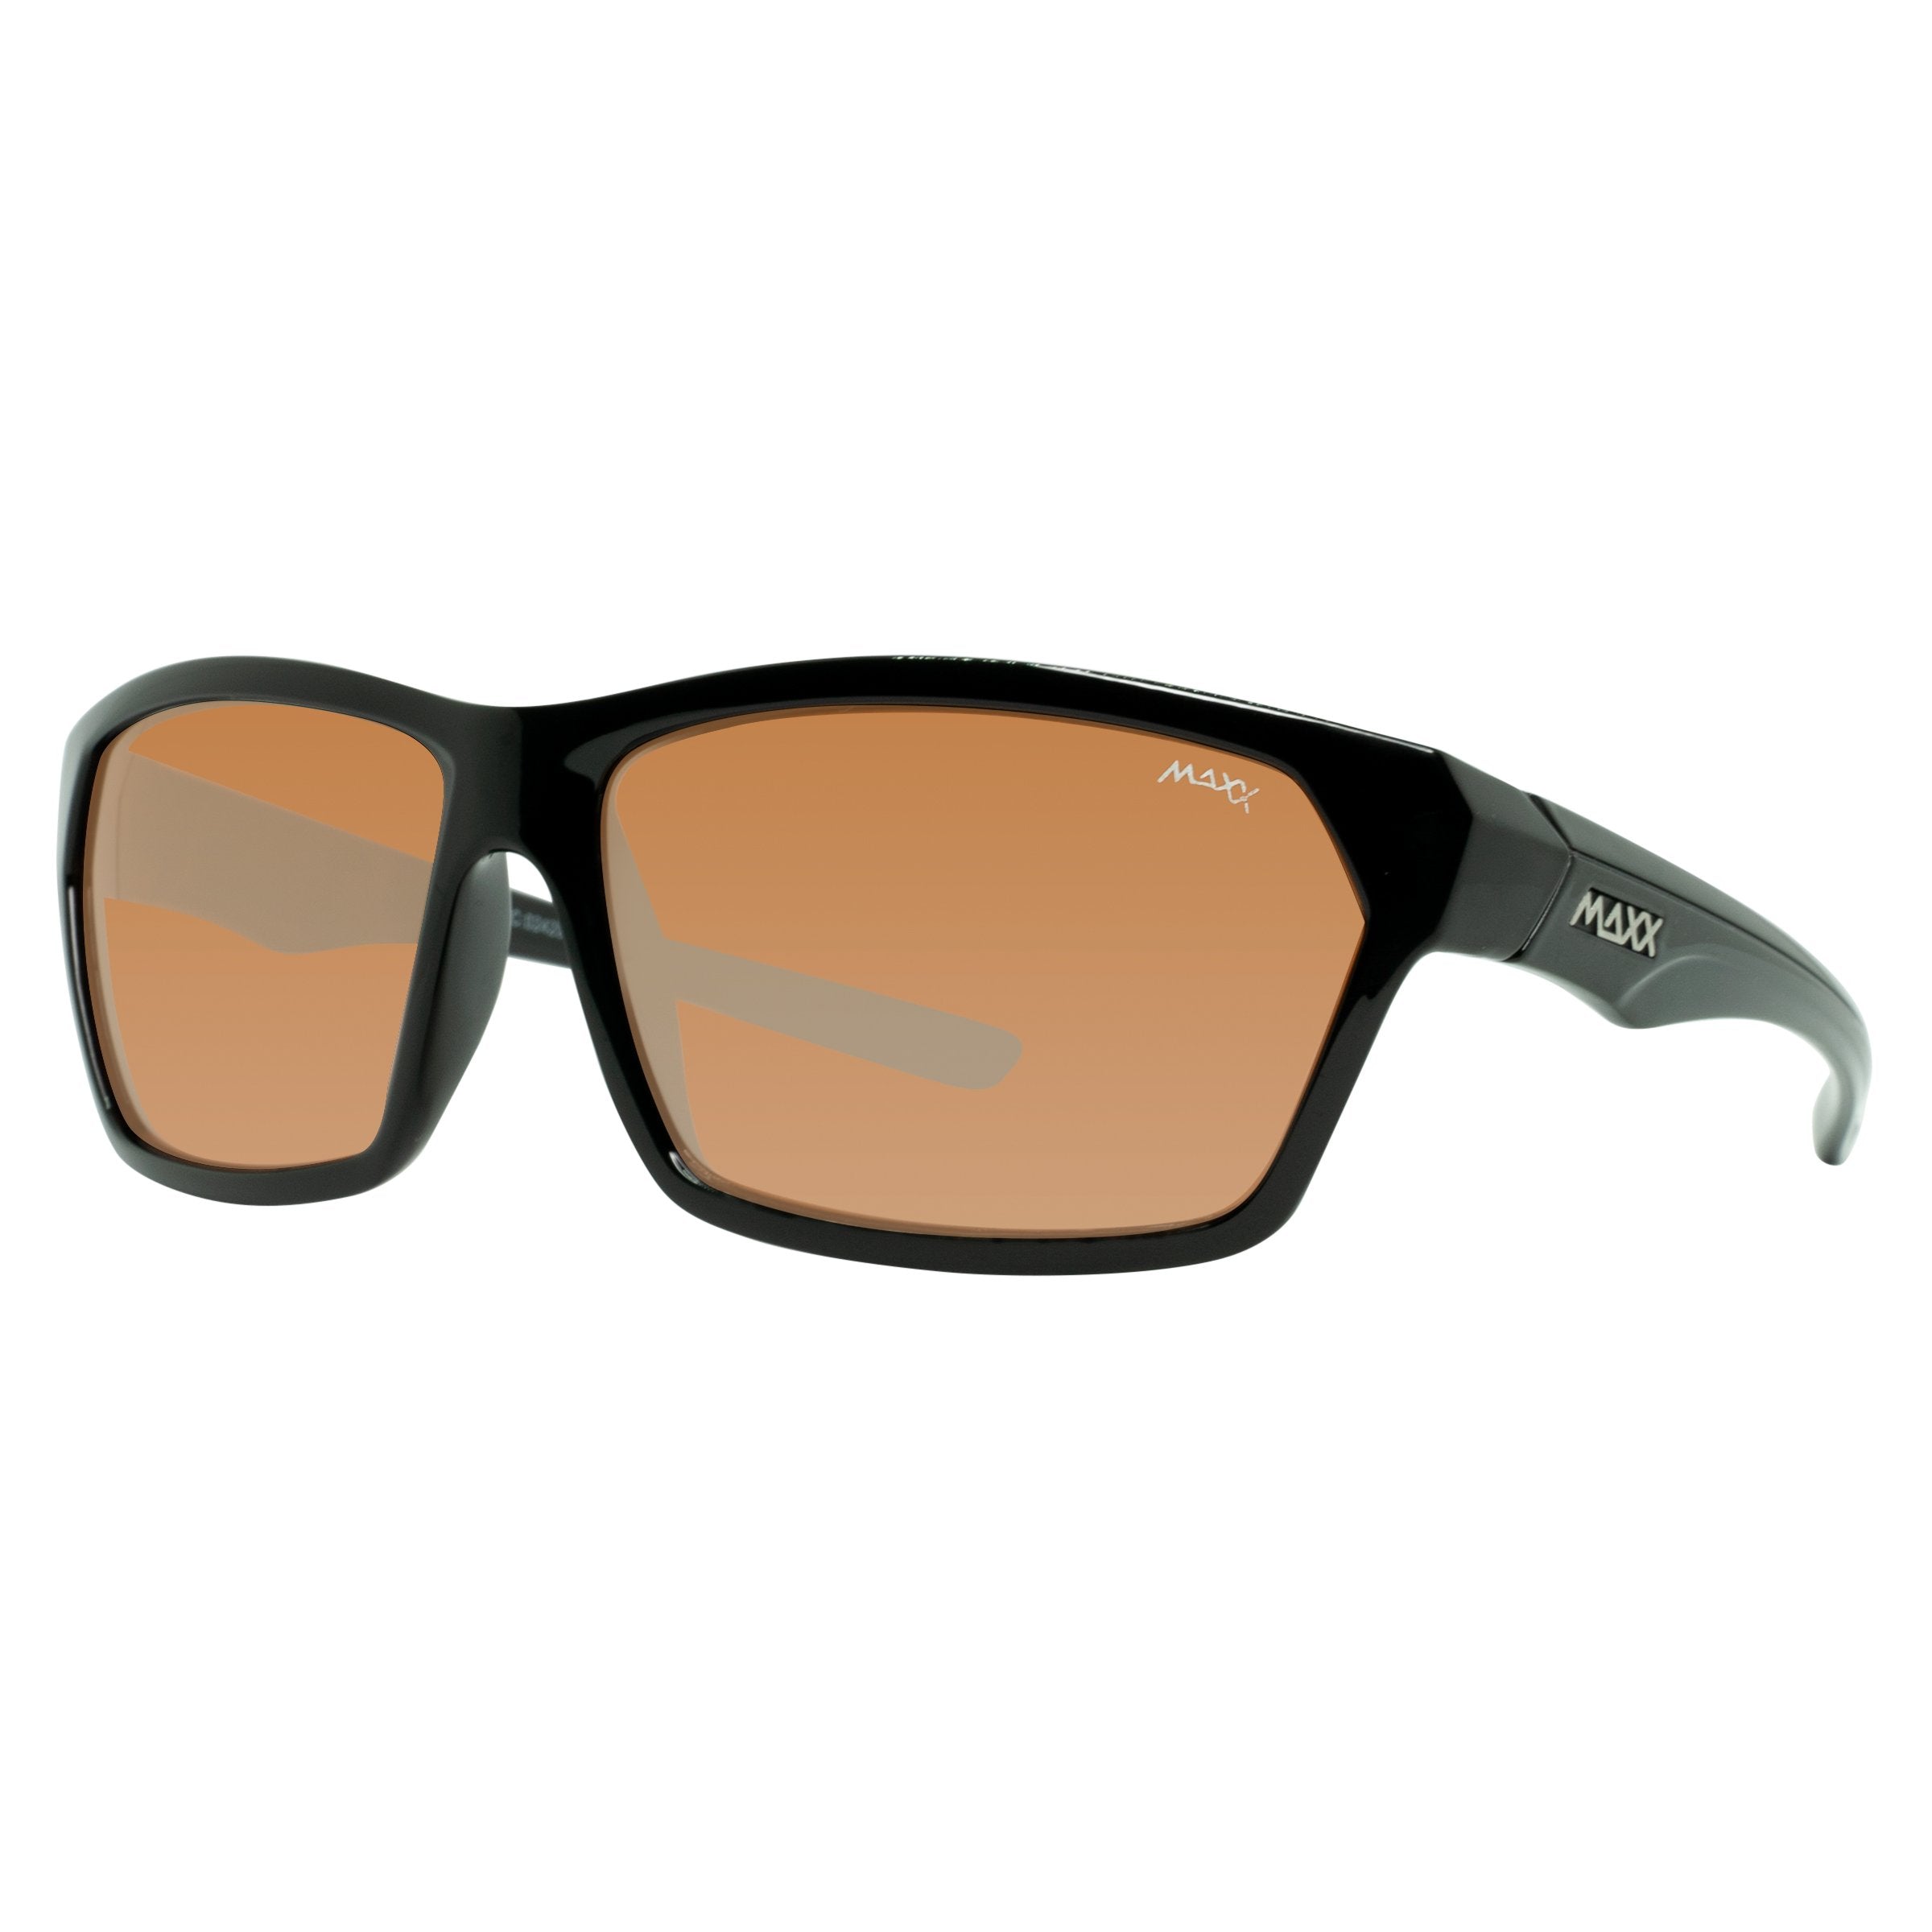 Mirrored Smoke Polarized Sunglasses - Black Full Frame Retro 2.0